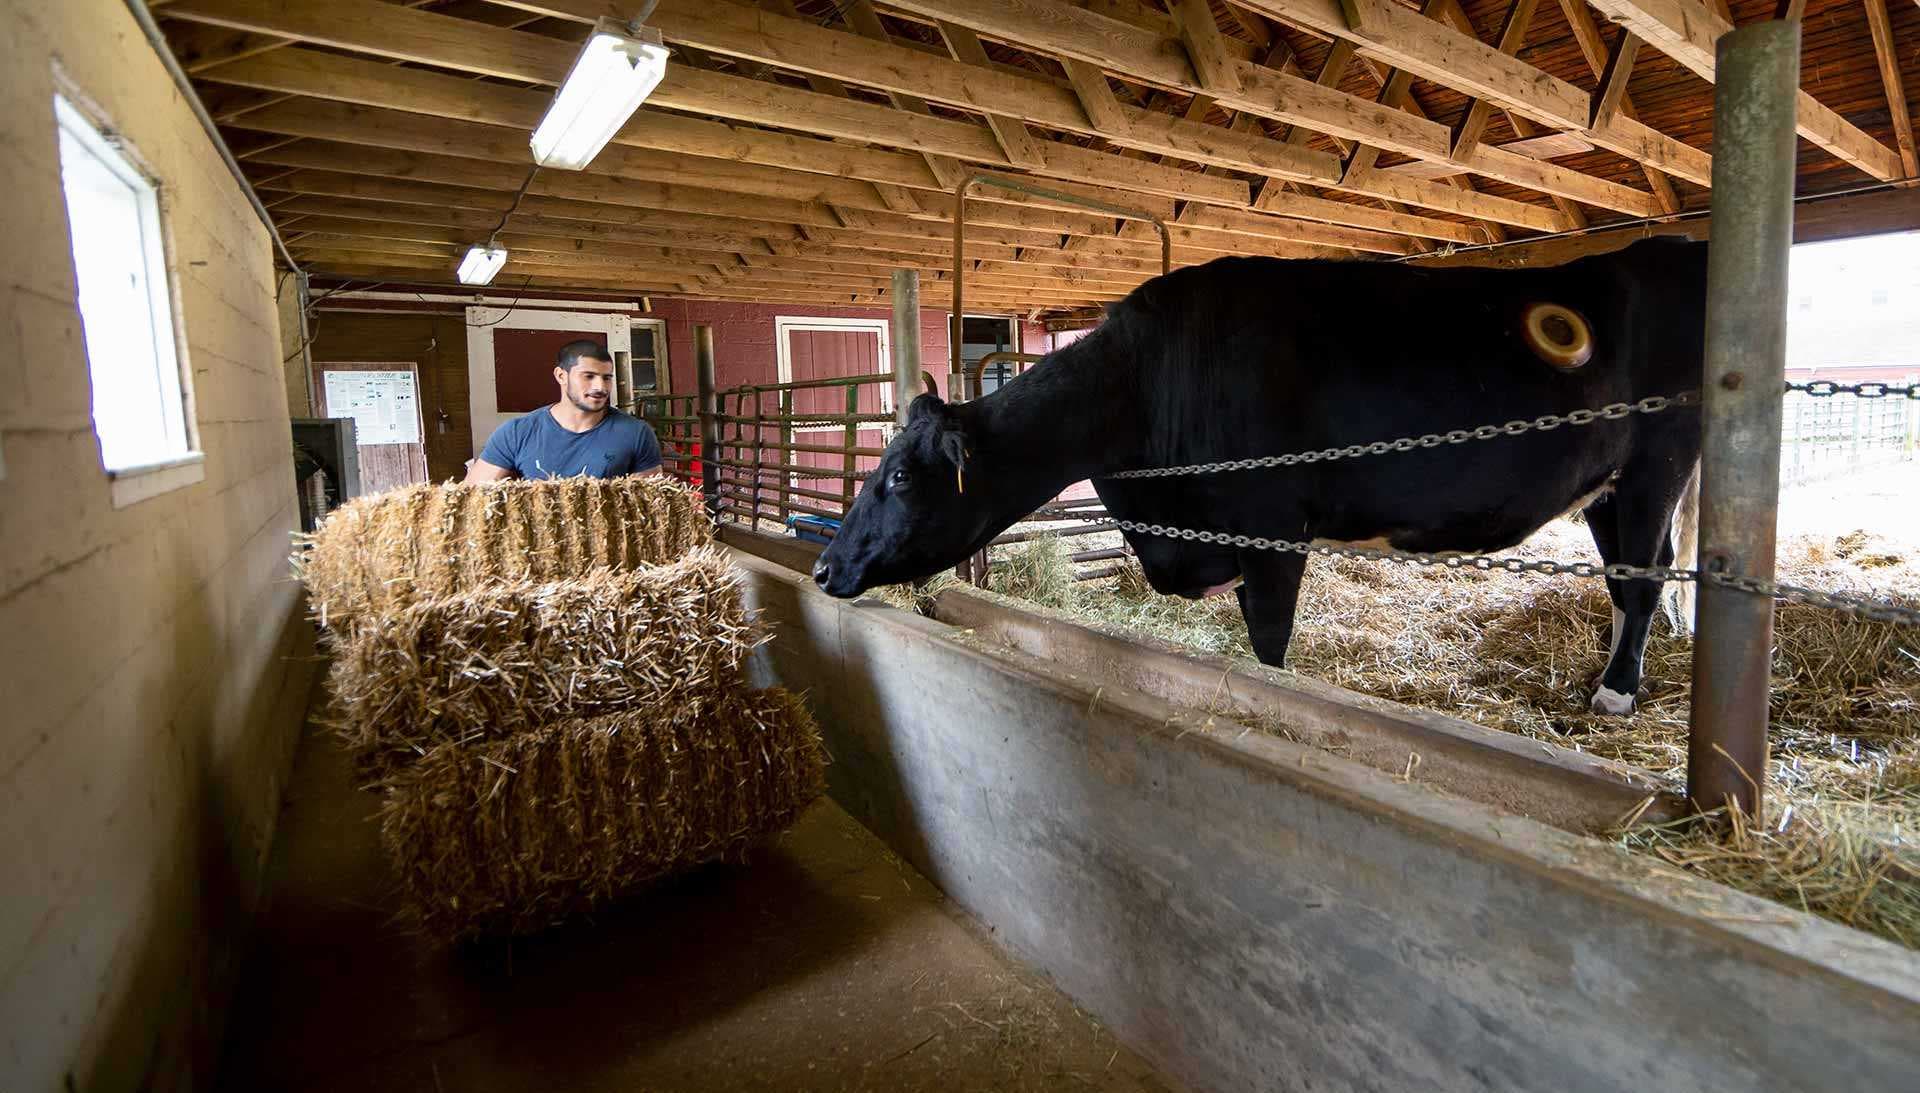 students wheels bales of hay toward cow